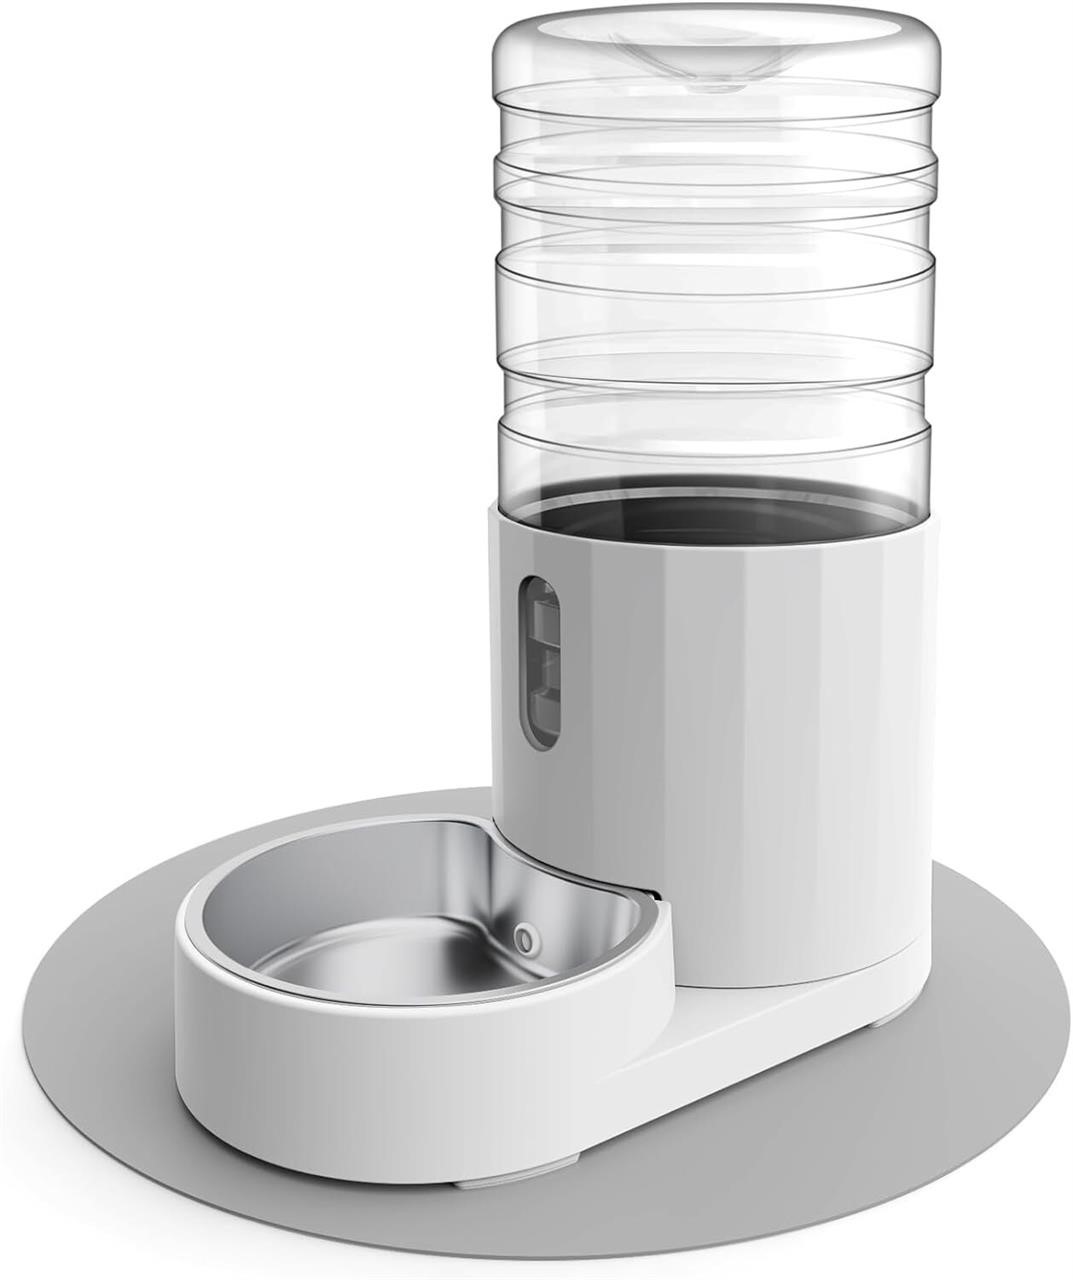 Pet Water Dispenser 4L w/Stainless Steel Bowl